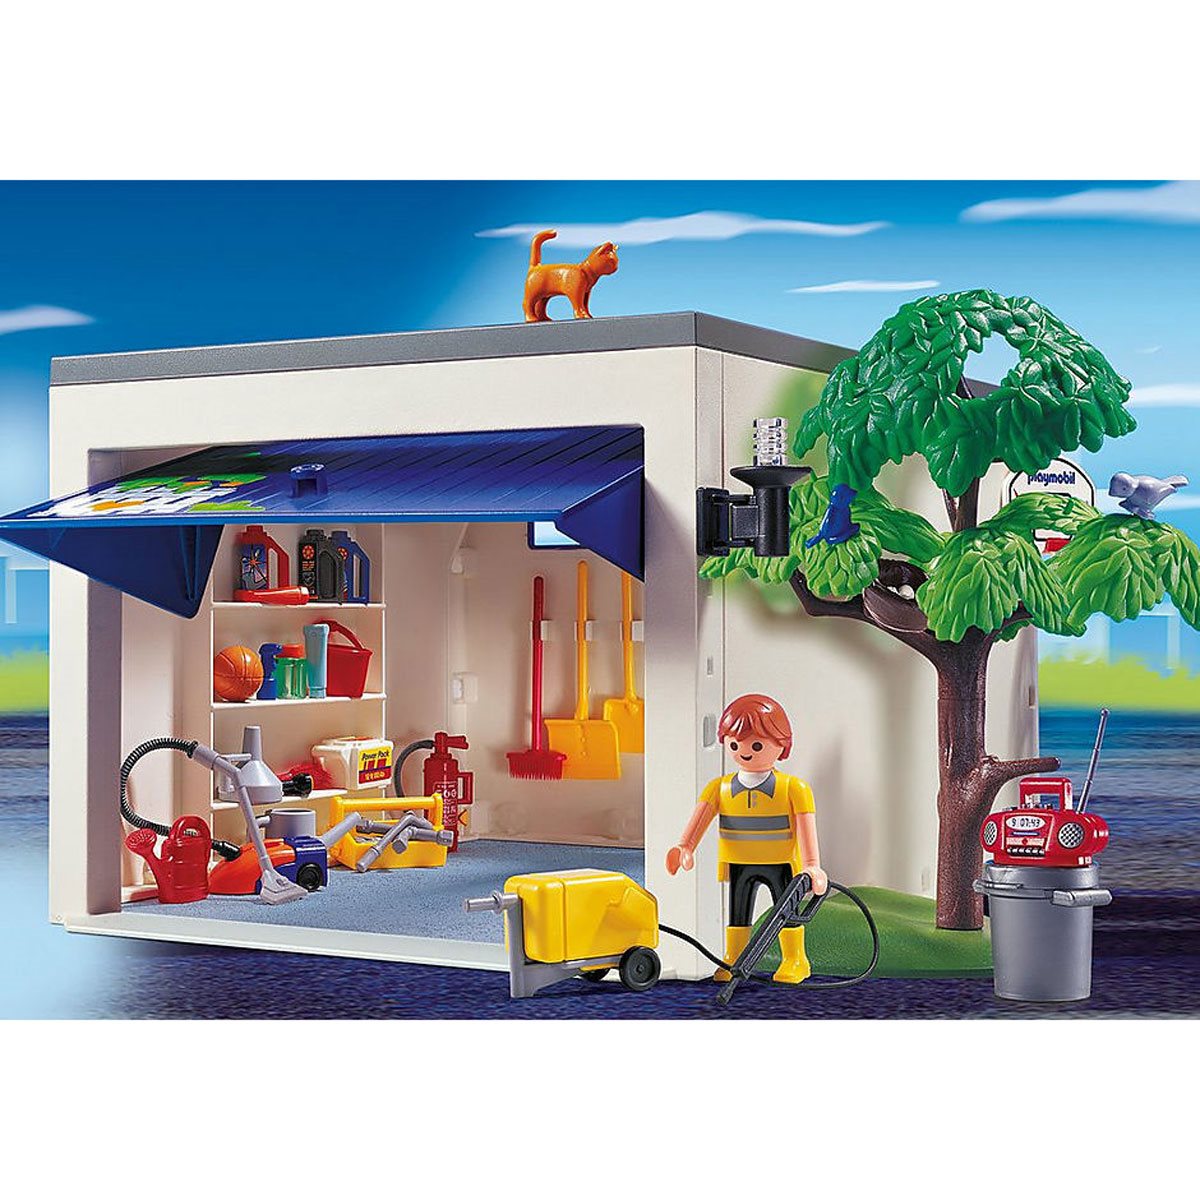 Playmobil 4318 Garage Playset - Entertainment Earth